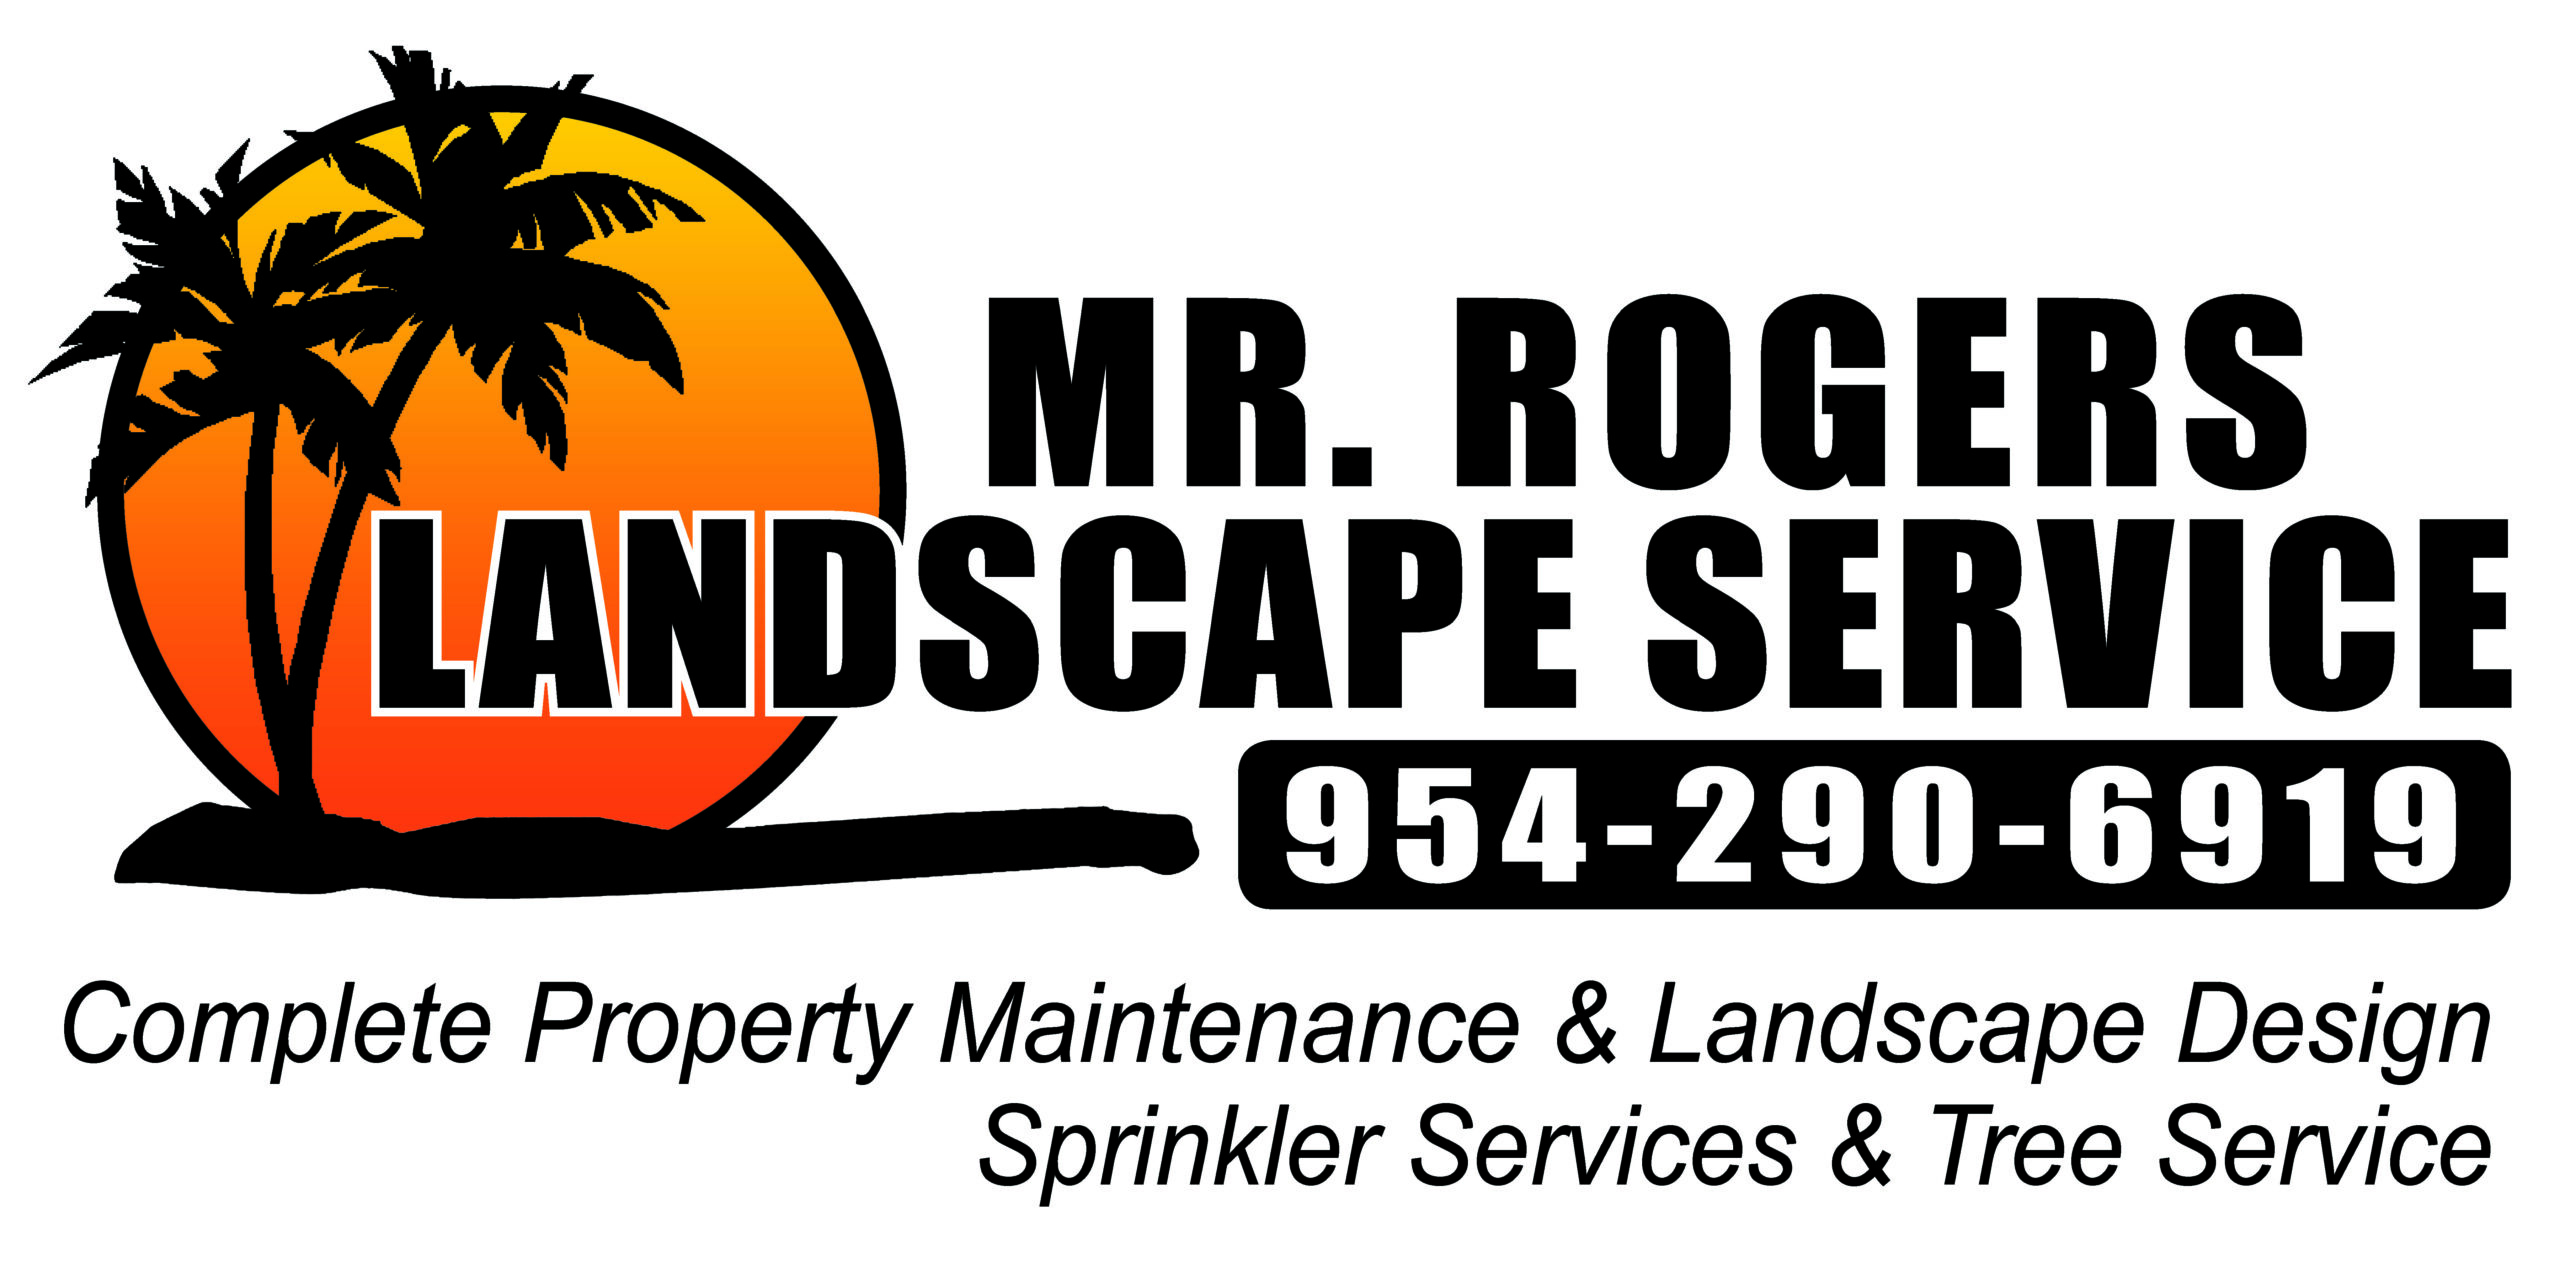 Mr. Rogers Landscape Service